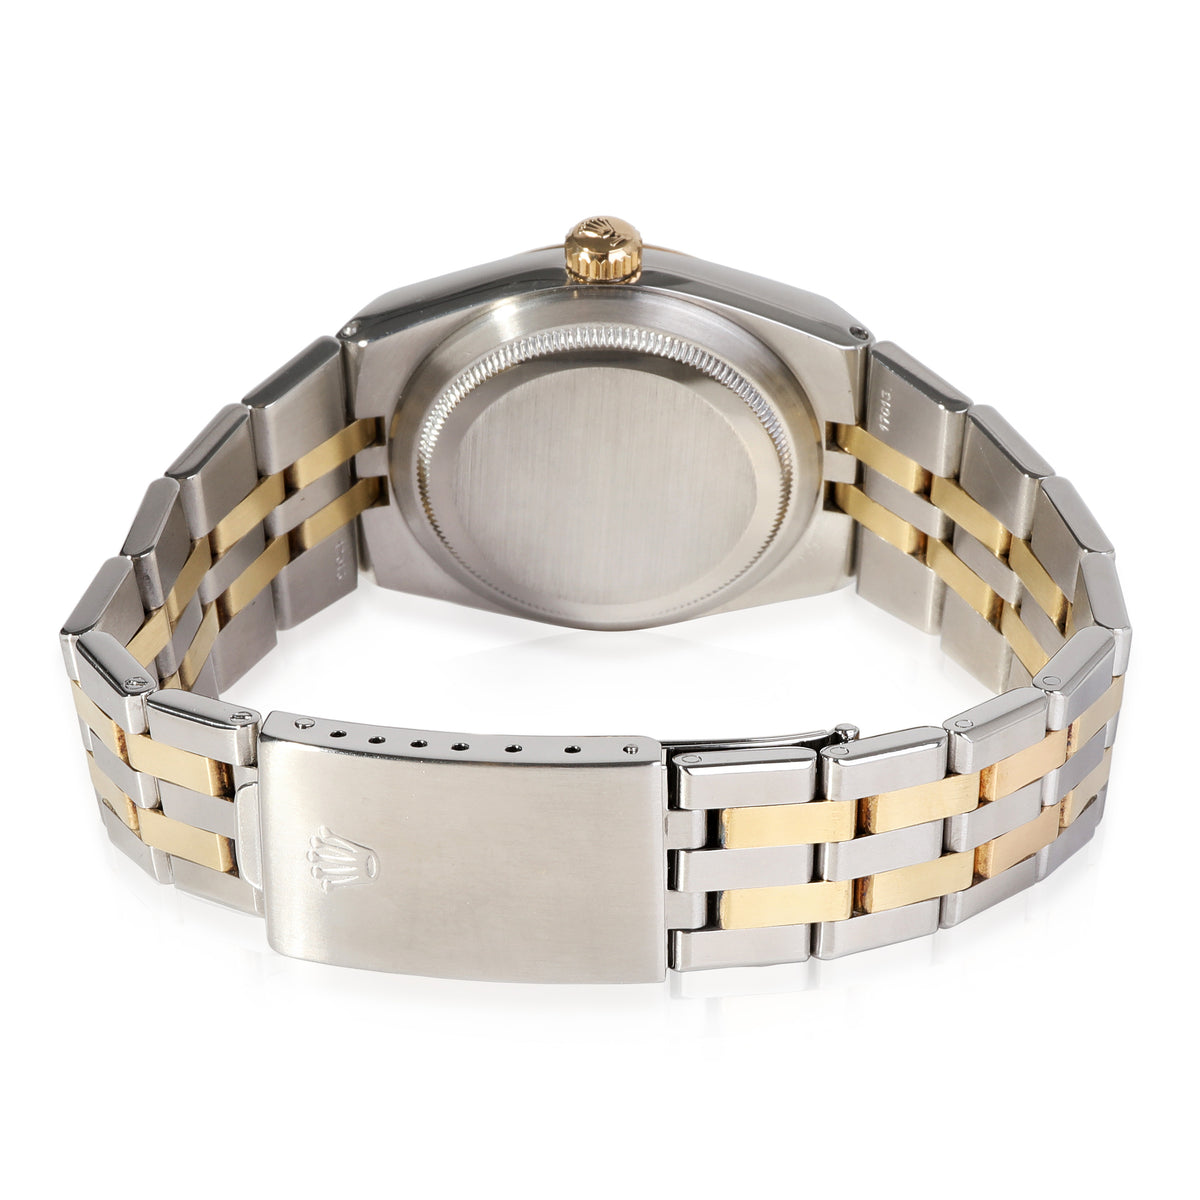 Rolex Datejust 17013 Men's Watch in 18kt Stainless Steel/Yellow Gold